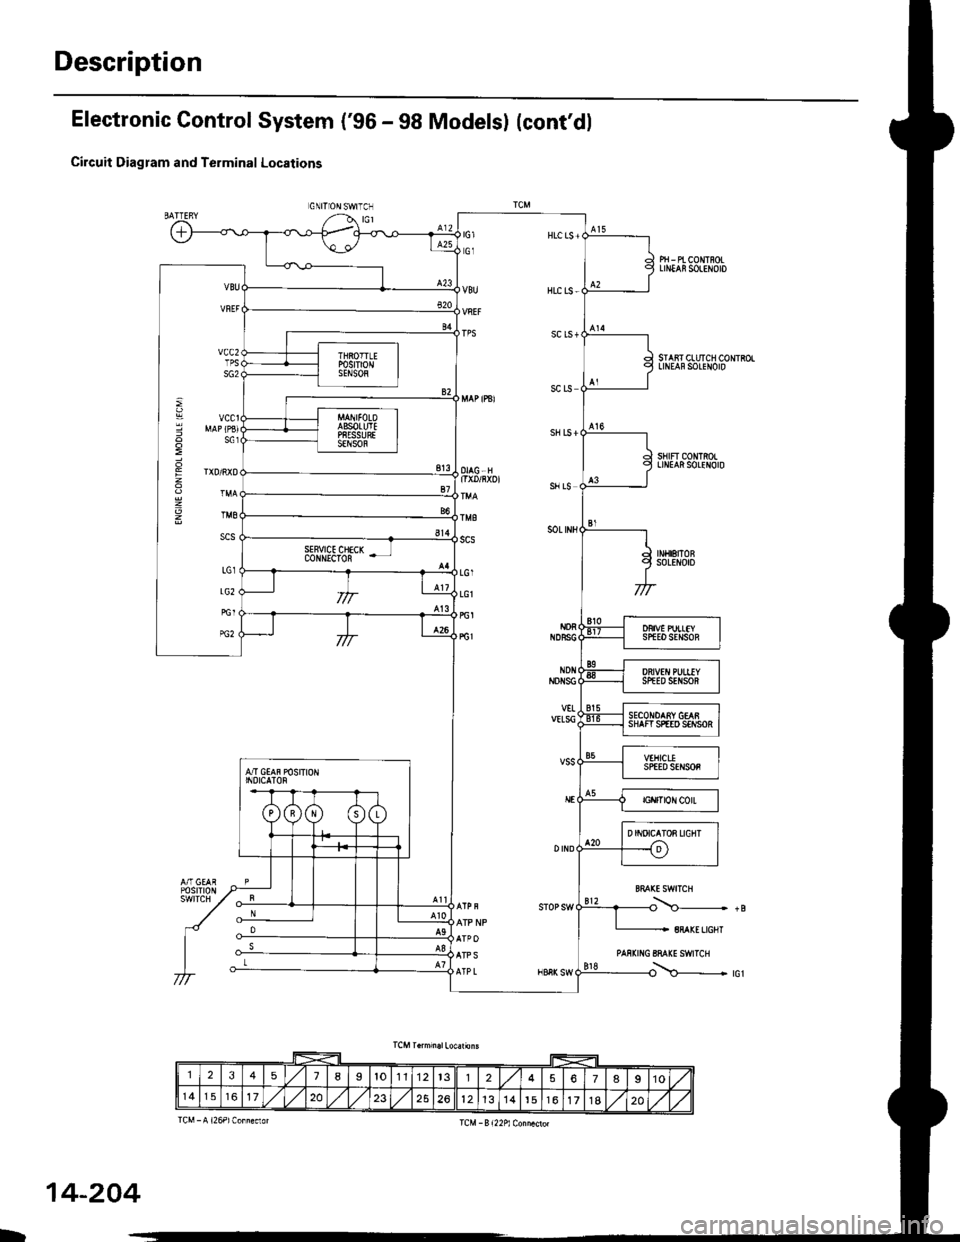 HONDA CIVIC 1996 6.G Workshop Manual Description
Electronic Control System (gG - 98 Modelsl (contdl
Circuit Diagram and Terminal Locations
GNITIONSWITCN
Pri - Pt coNTnoLLrN ns0LtN0t0
SIAiT CLUTCH CONTSOLLINEAFSOLENOID
sHtFT CONmOILINIA